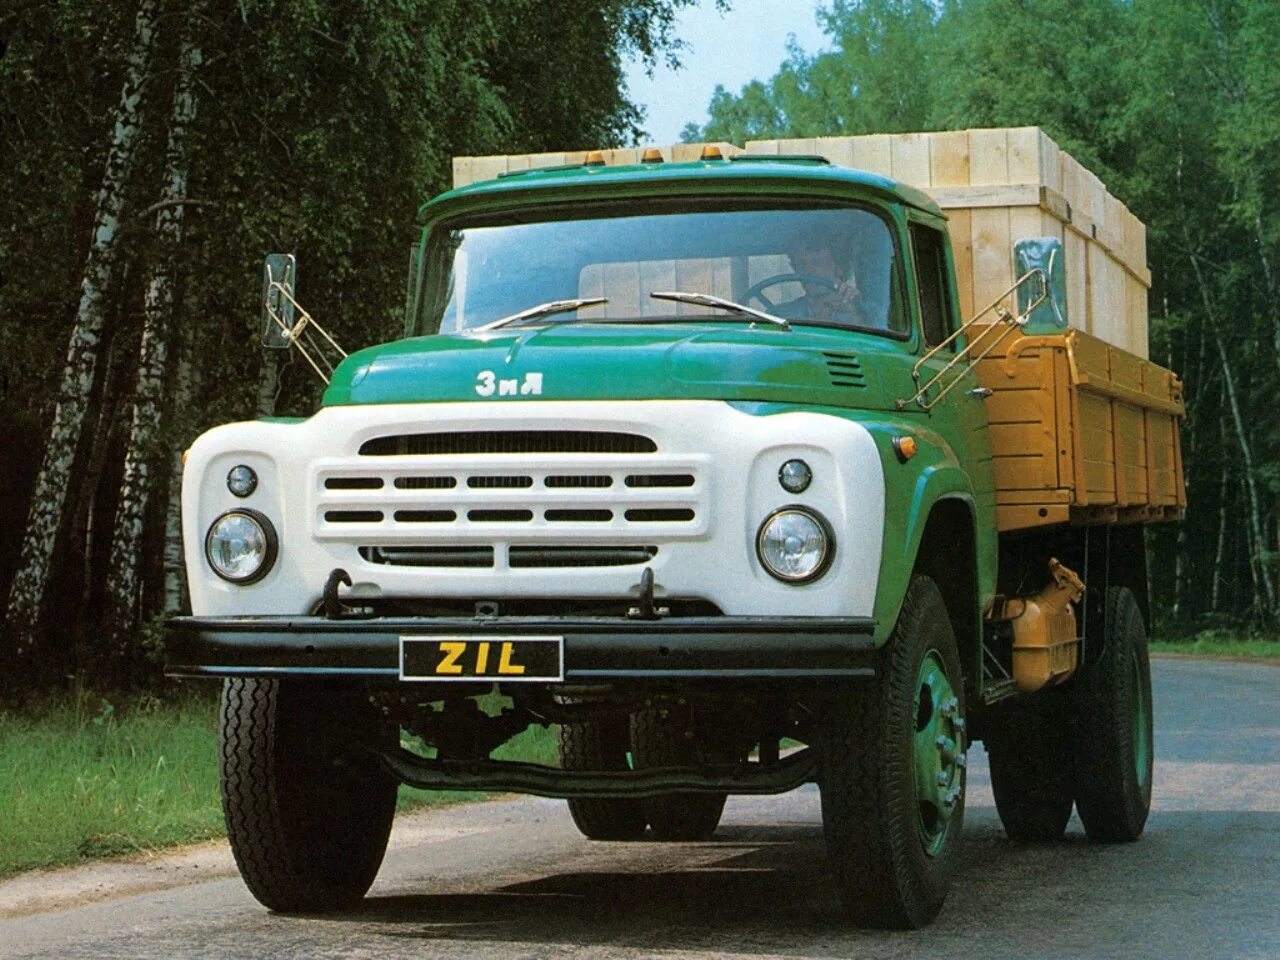 Грузовик ЗИЛ 130. ЗИЛ-130 грузовой автомобиль. ЗИЛ 130-76. ЗИЛ 130 СССР. Зил 130 бензиновый